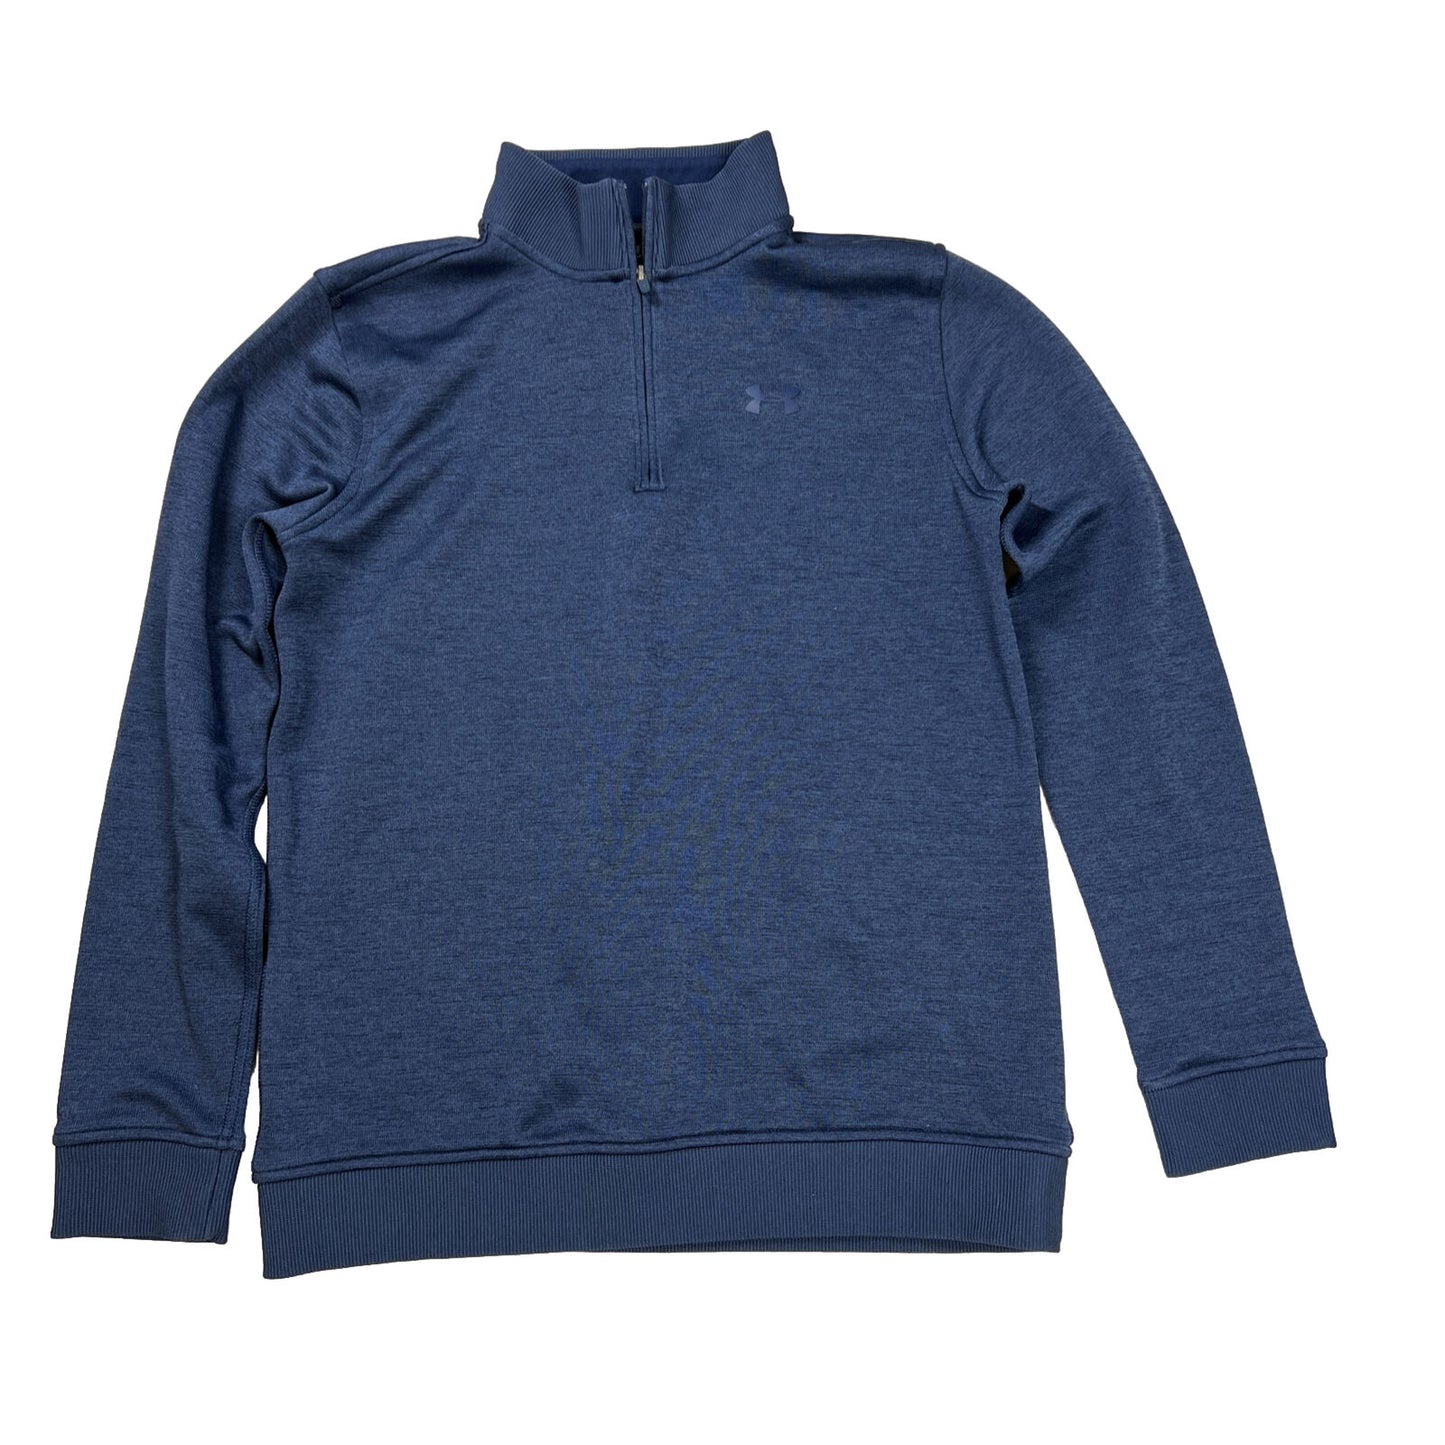 Under Armour Boys Big Kids Blue Long Sleeve 1/2 Zip Sweatshirt - XL